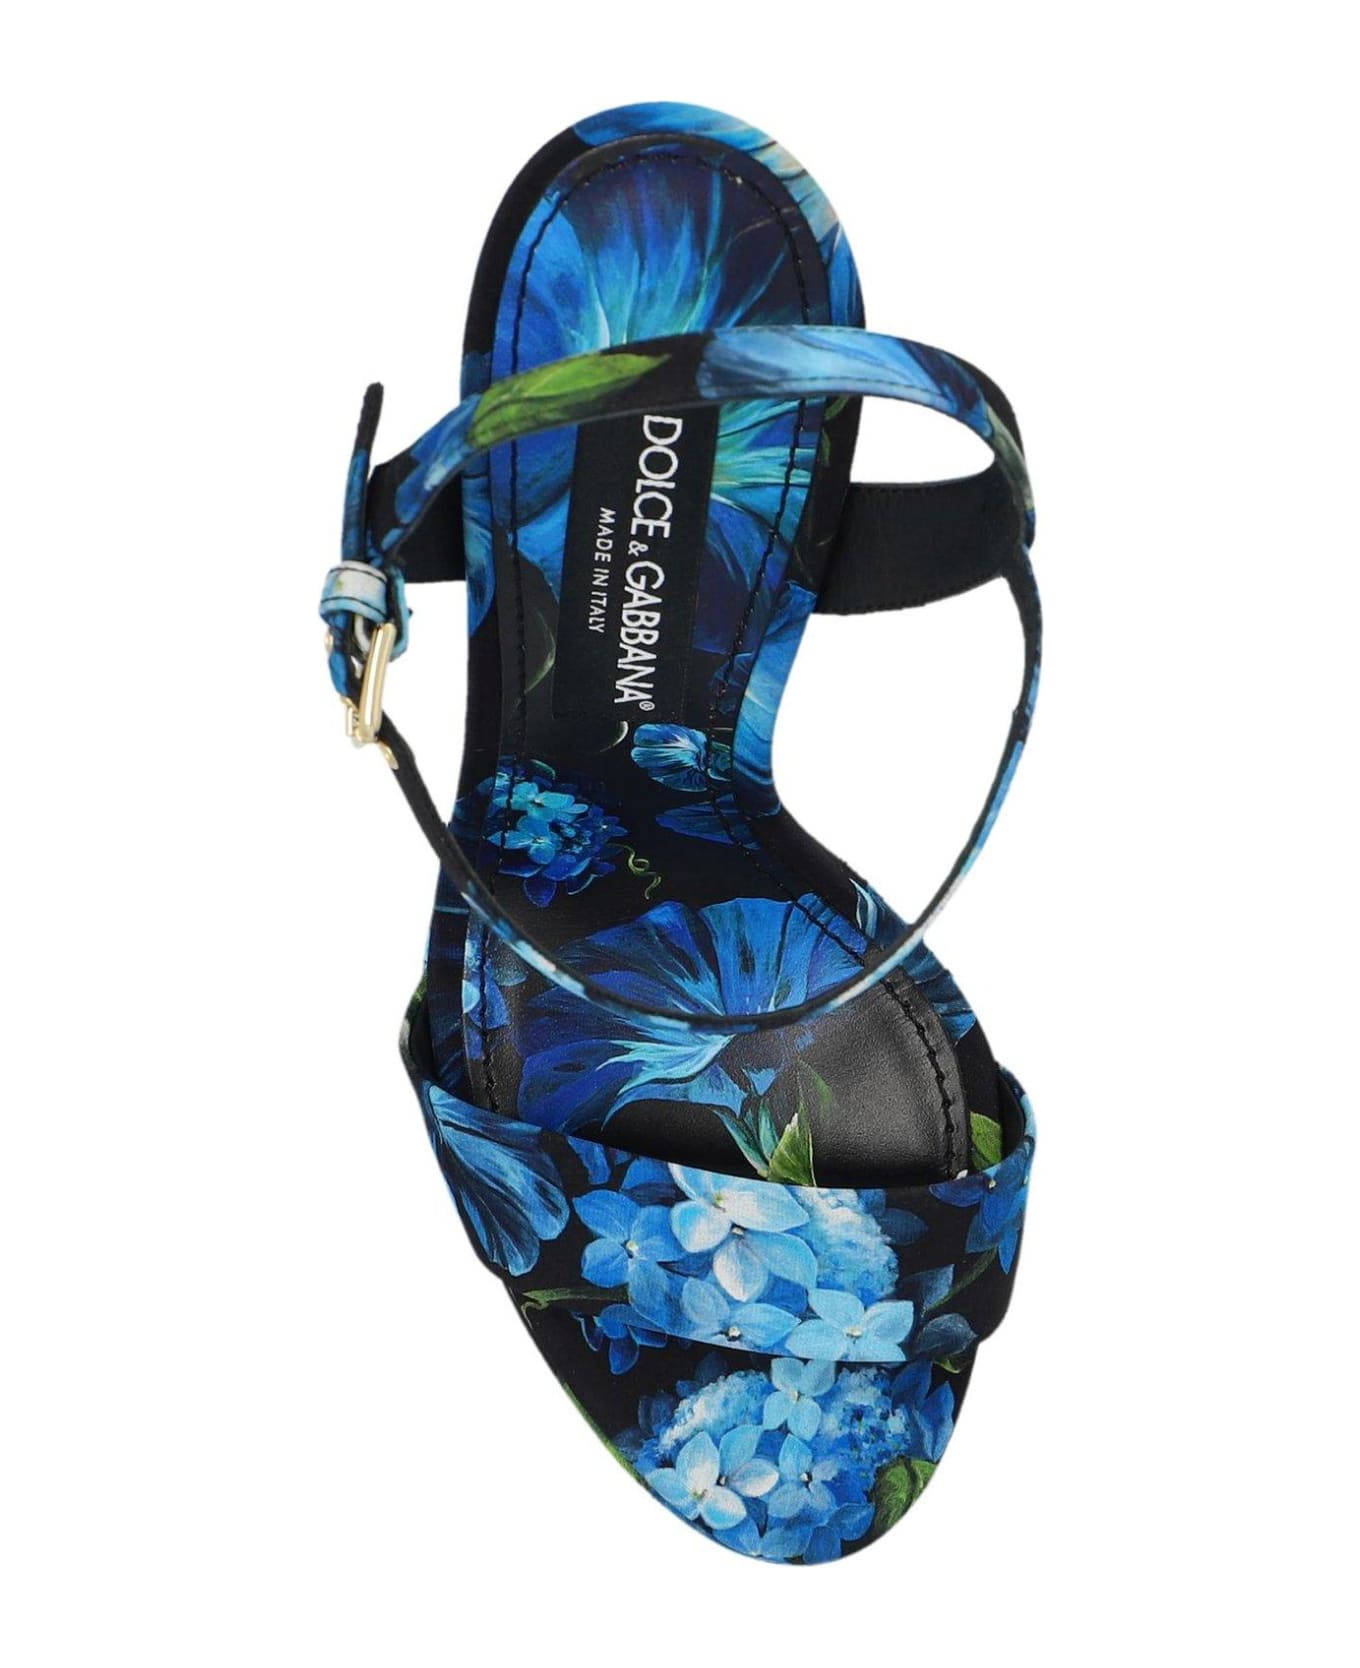 Dolce & Gabbana Bluebell Printed Charmeuse Platform Sandals - CAMPANULE FDO NERO サンダル